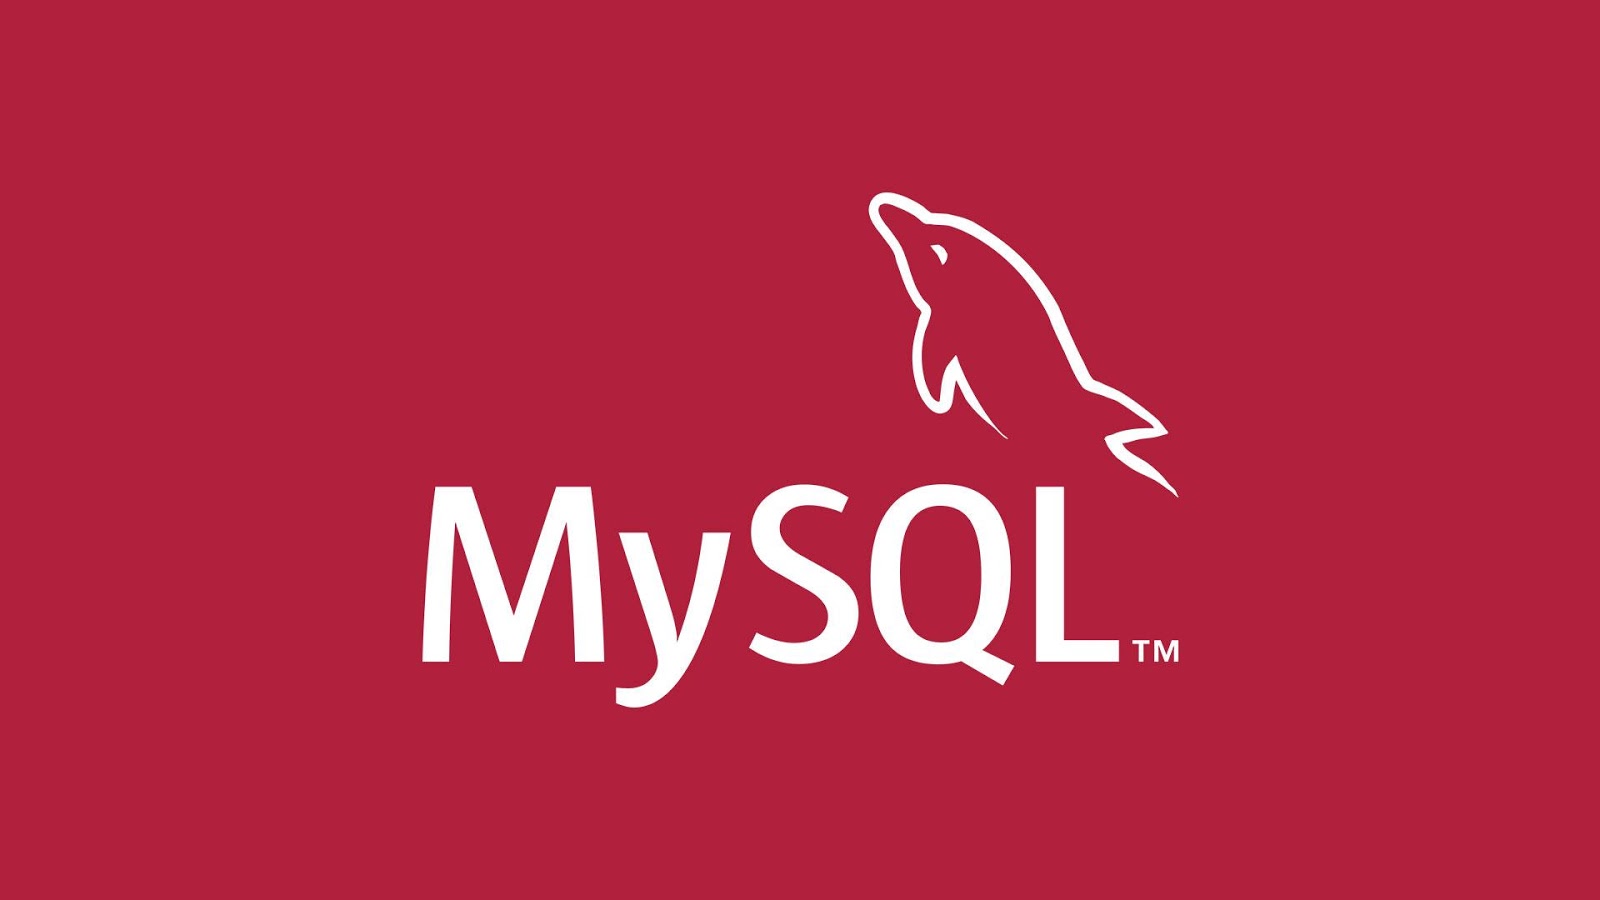 Por quê aprender MySQL?